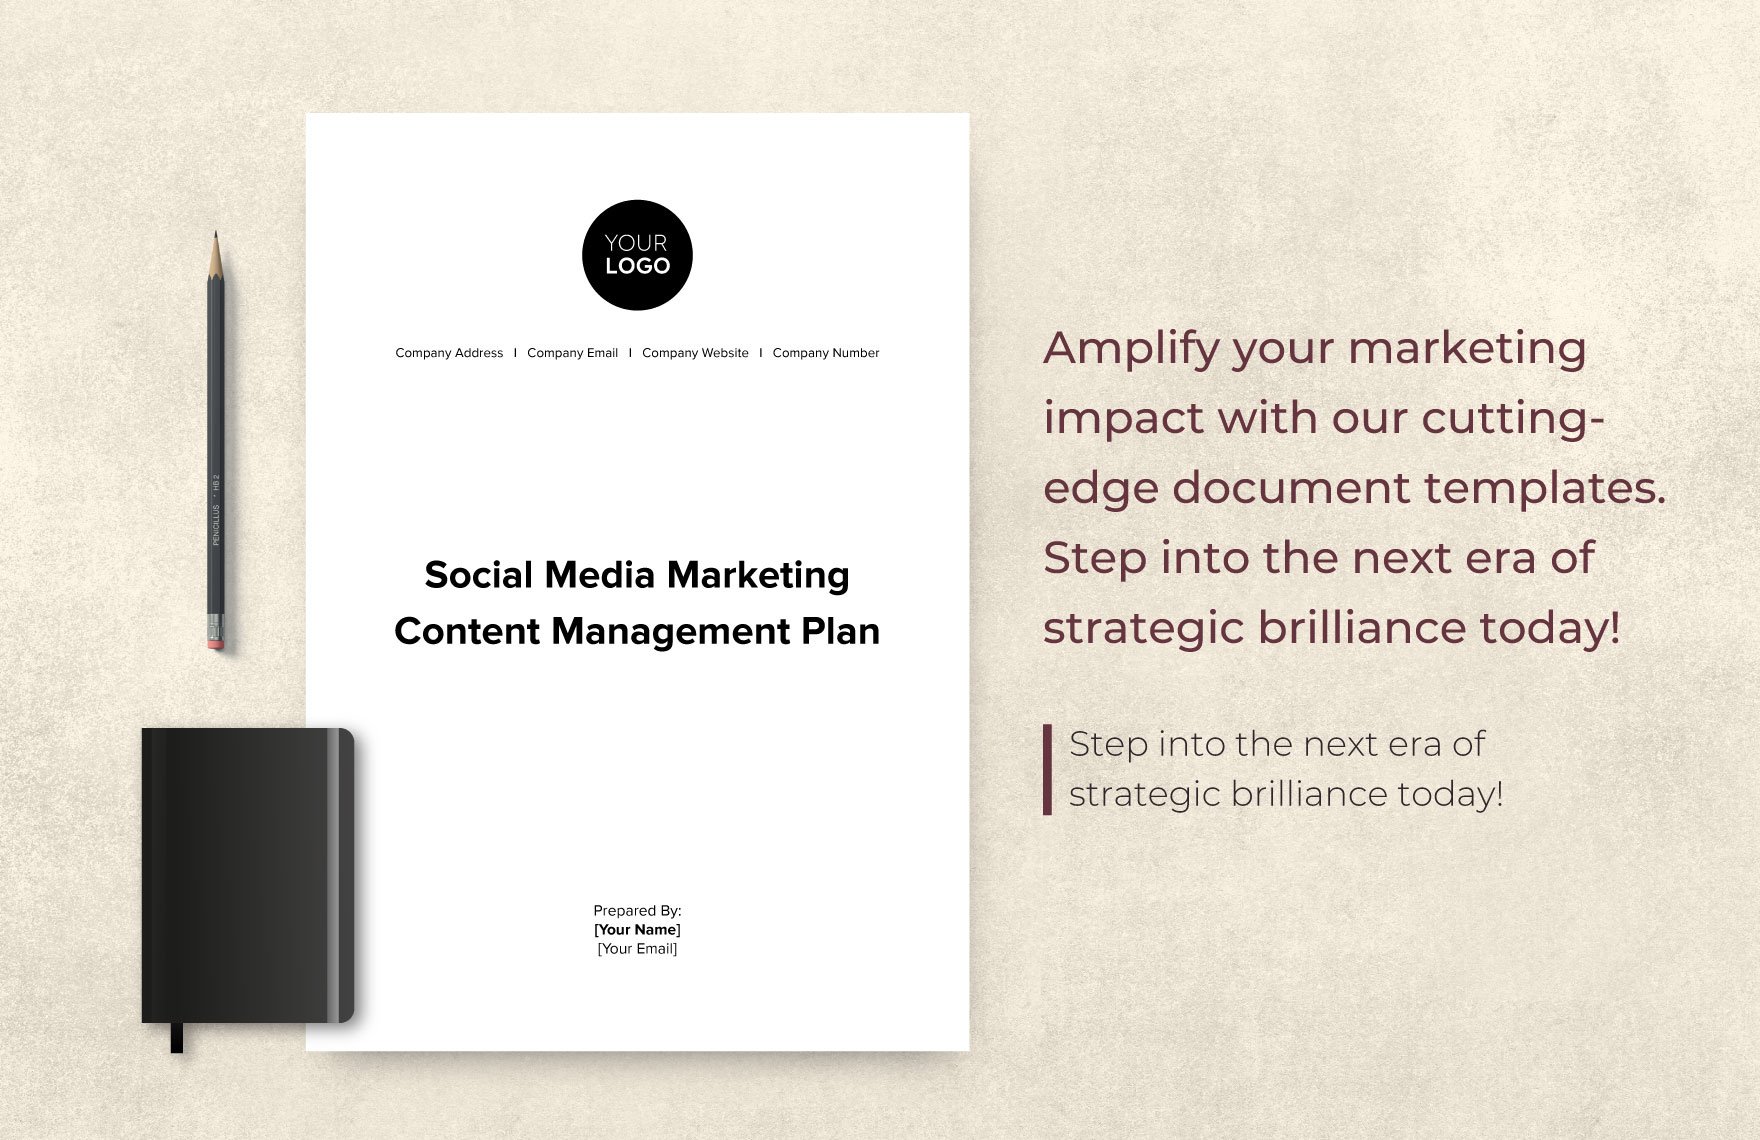 Social Media Marketing Content Management Plan Template